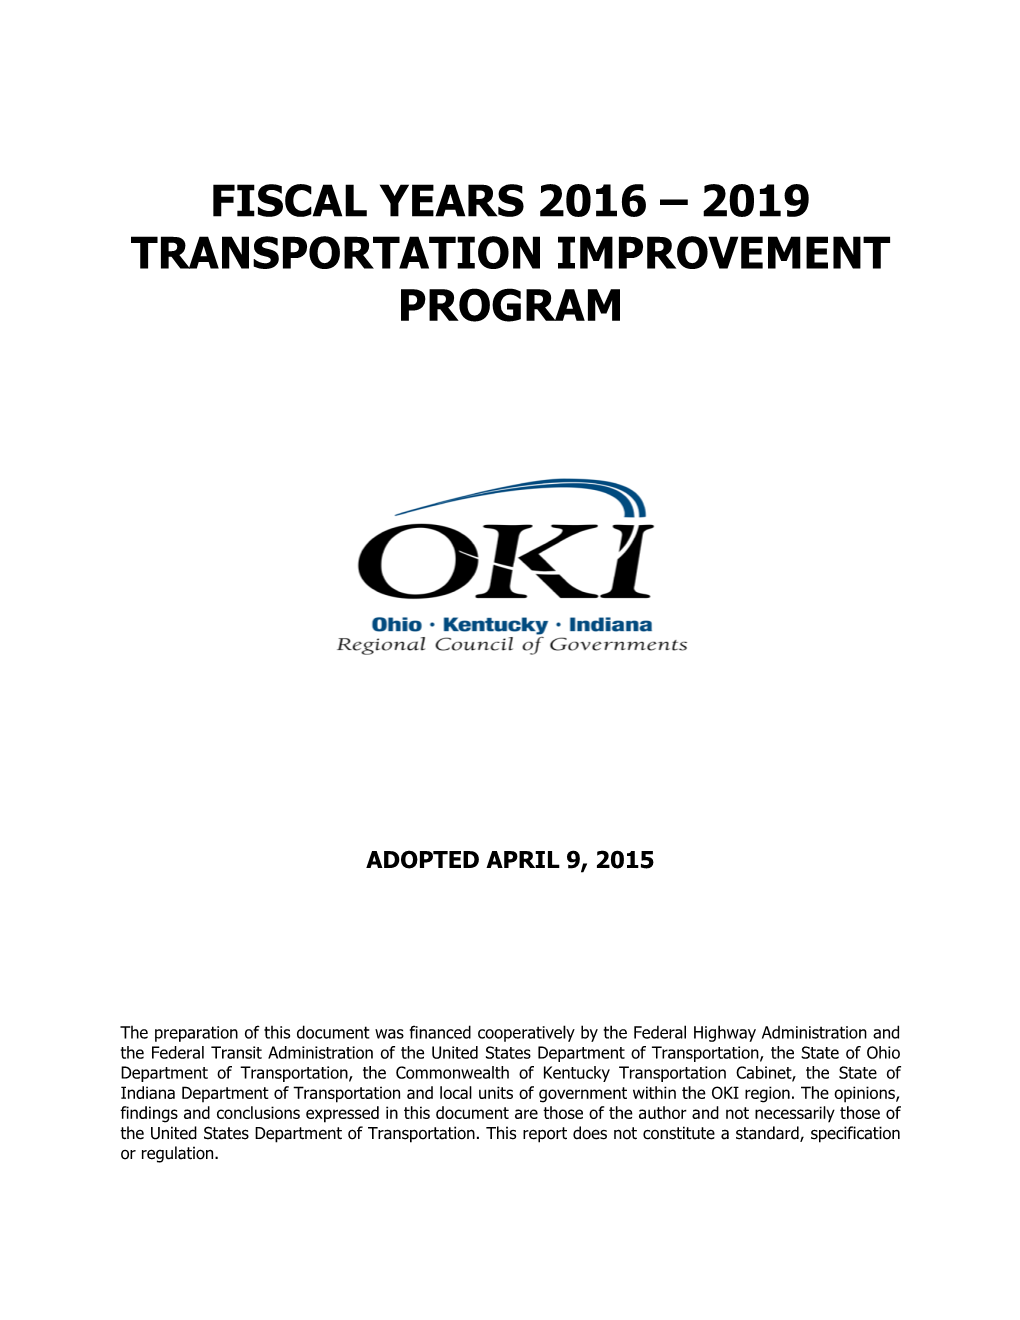 Fiscal Years 2016 – 2019 Transportation Improvement Program